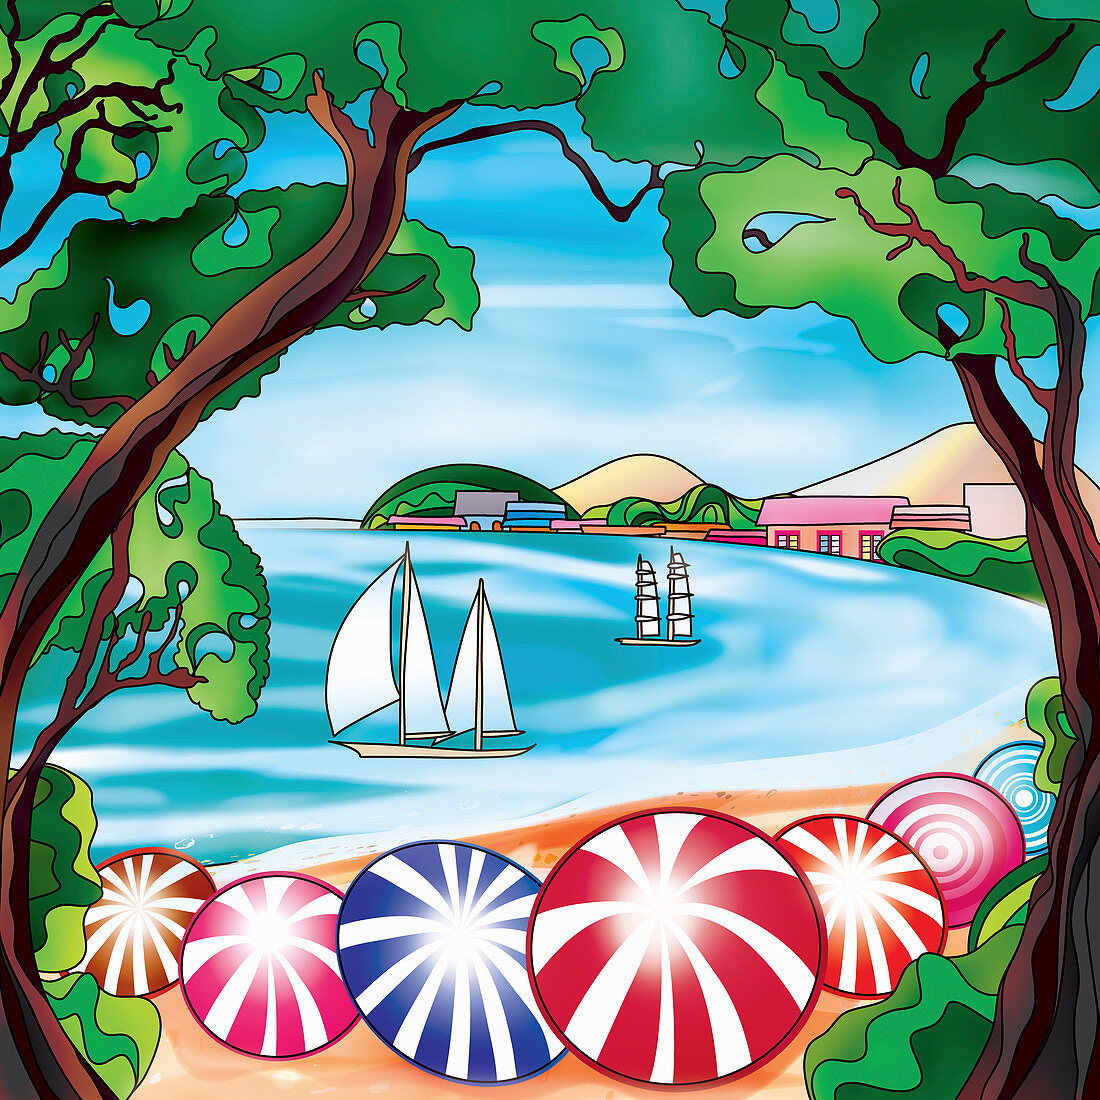 Beach umbrellas and sailboats in bay, illustration